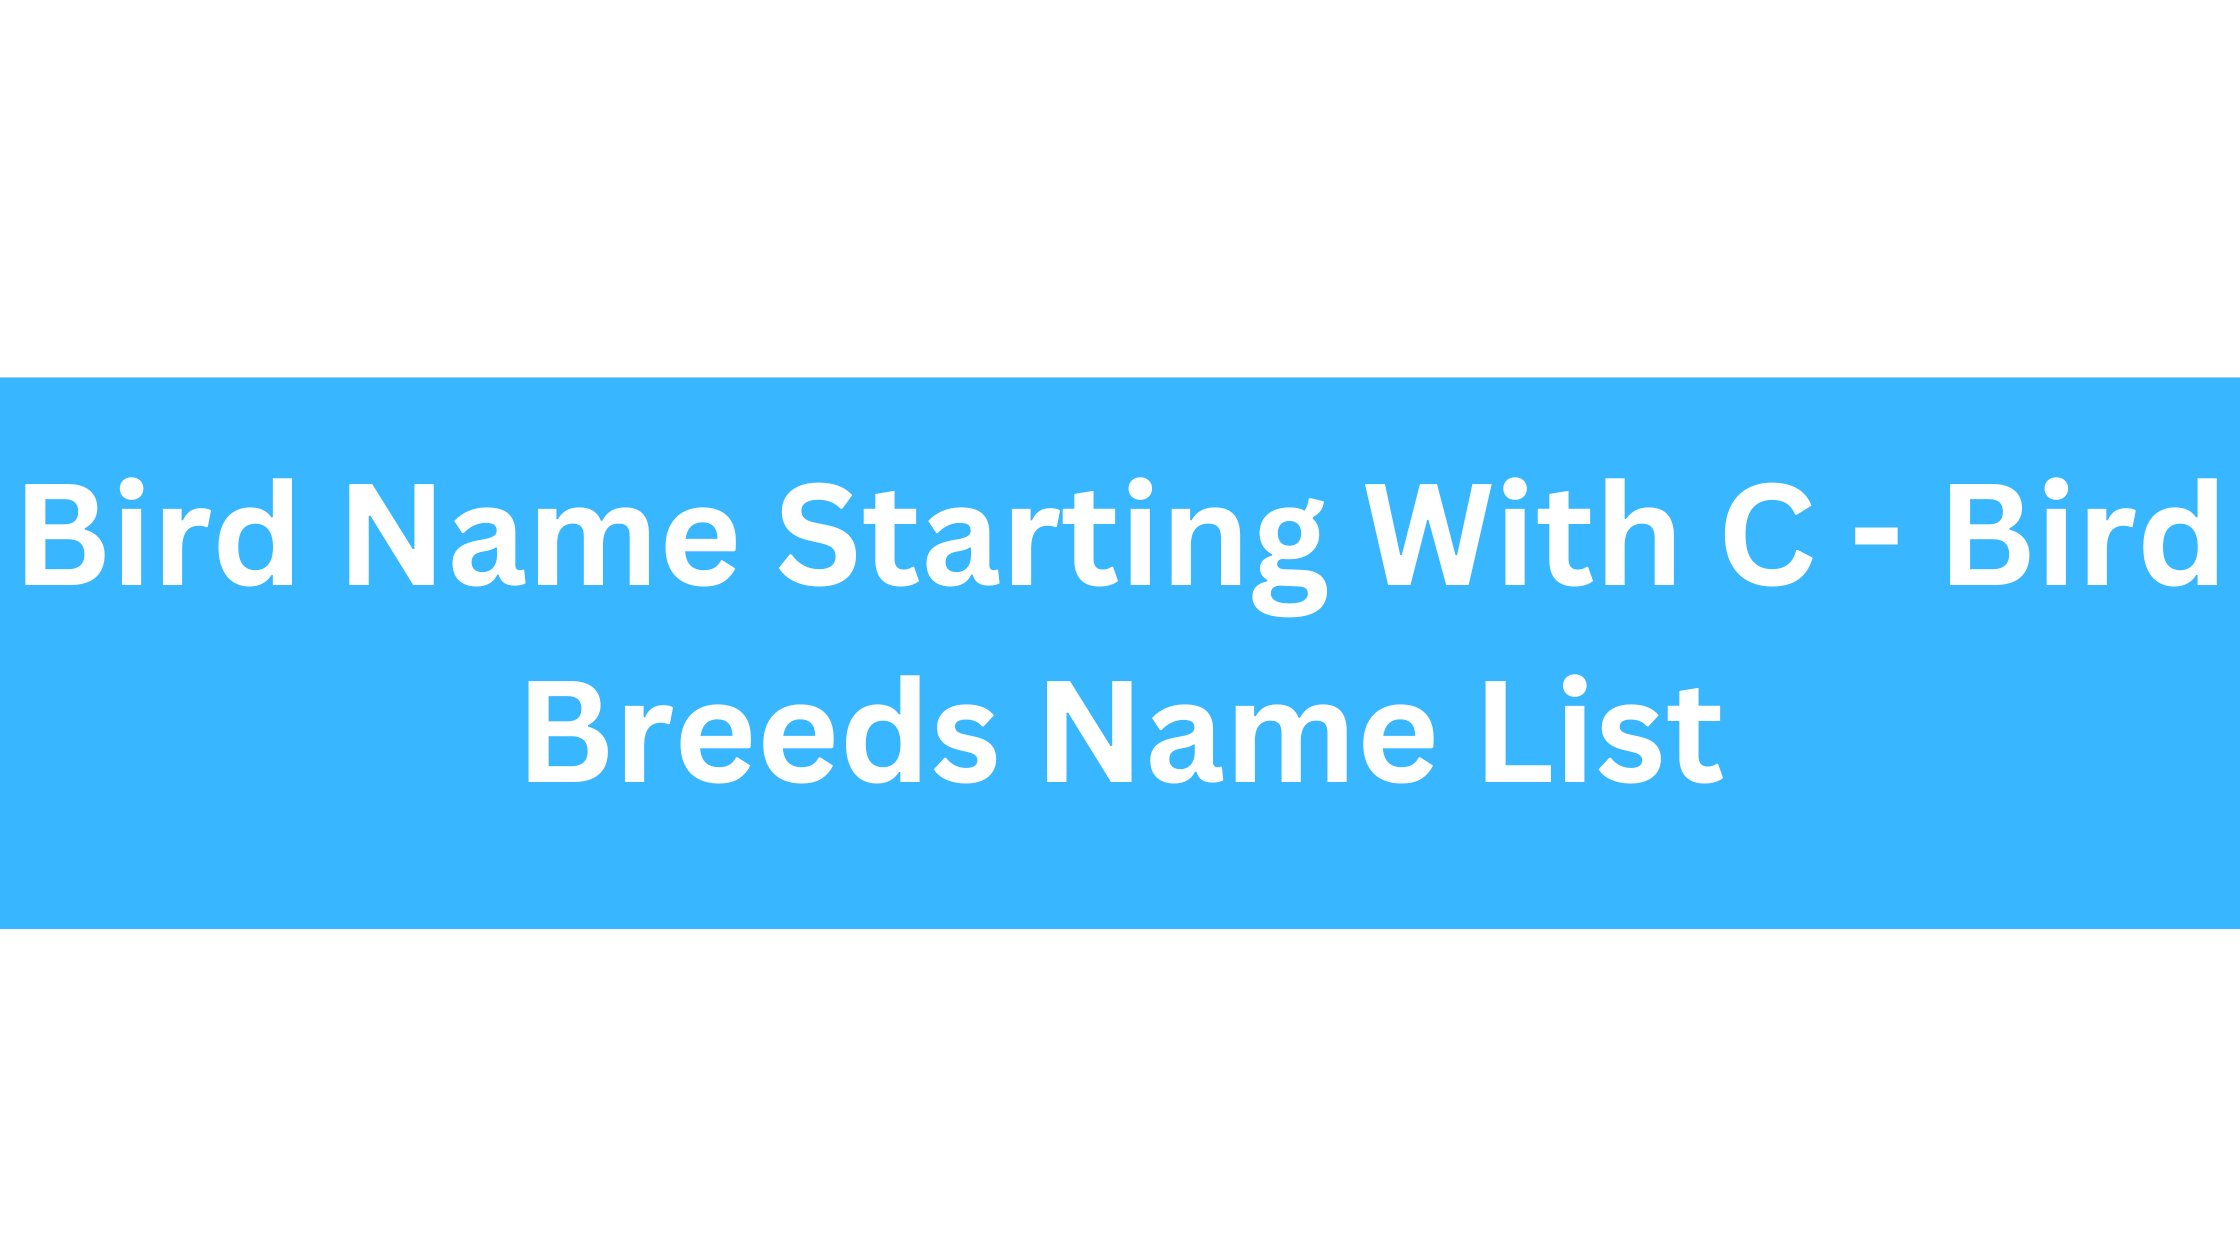 Bird Name Starting With C